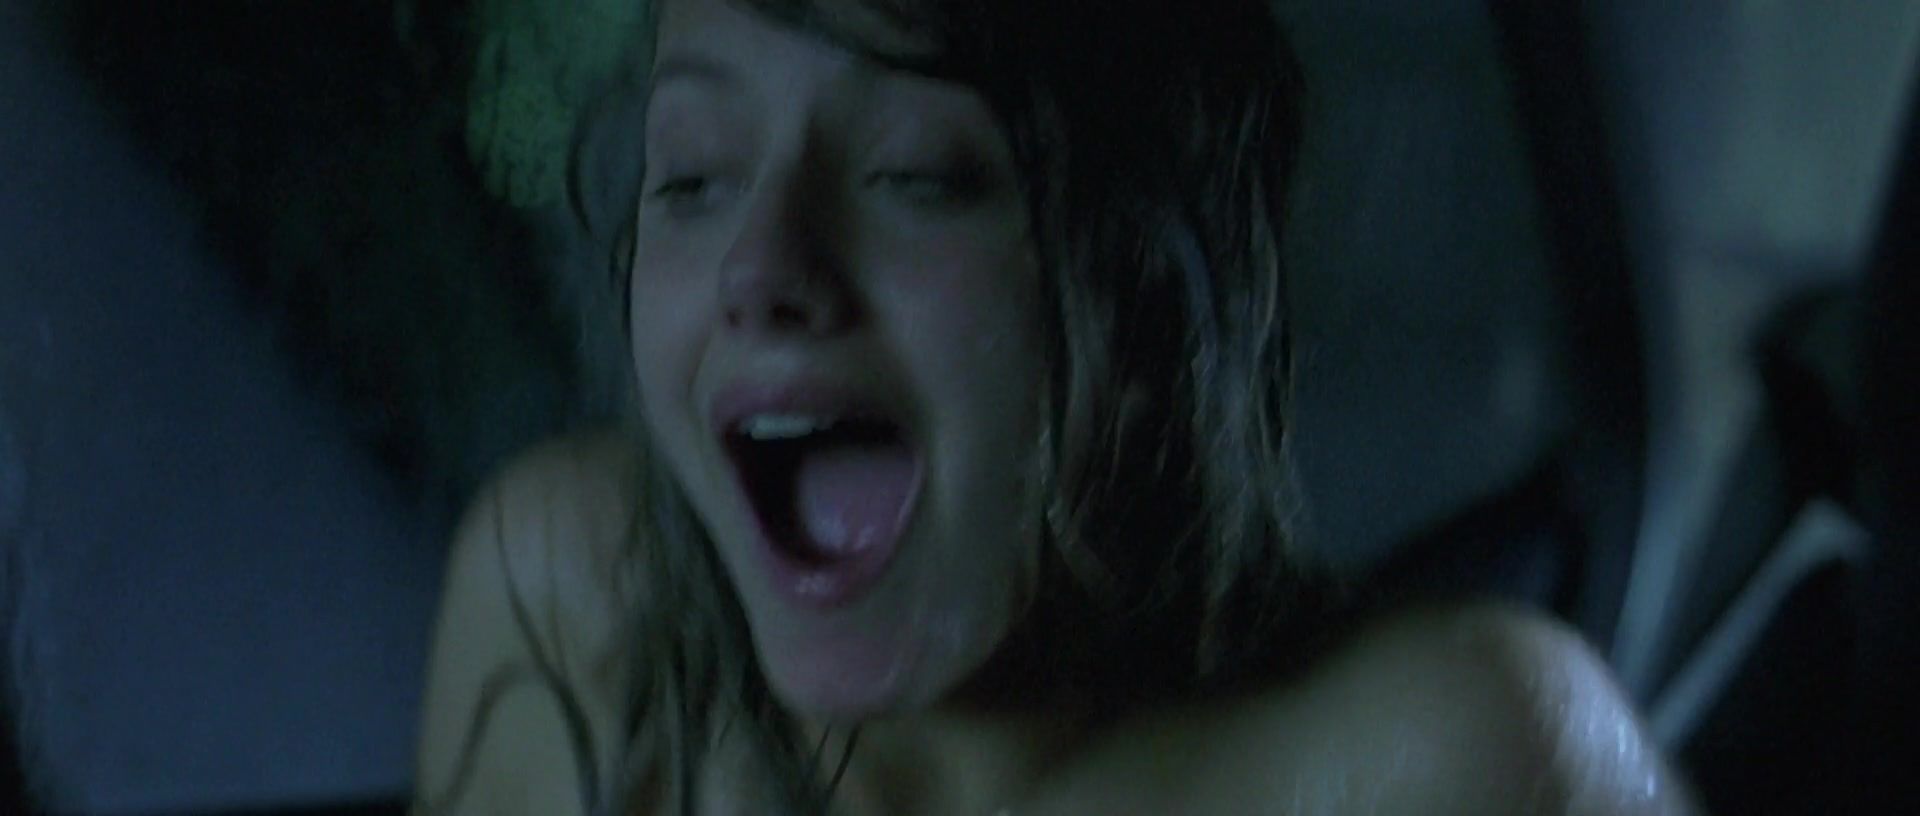 Big Boobs Naked Melanie Laurent from French movie "Je vais bien, ne t'en fais pas" | Released in 2006 Cavala - 1